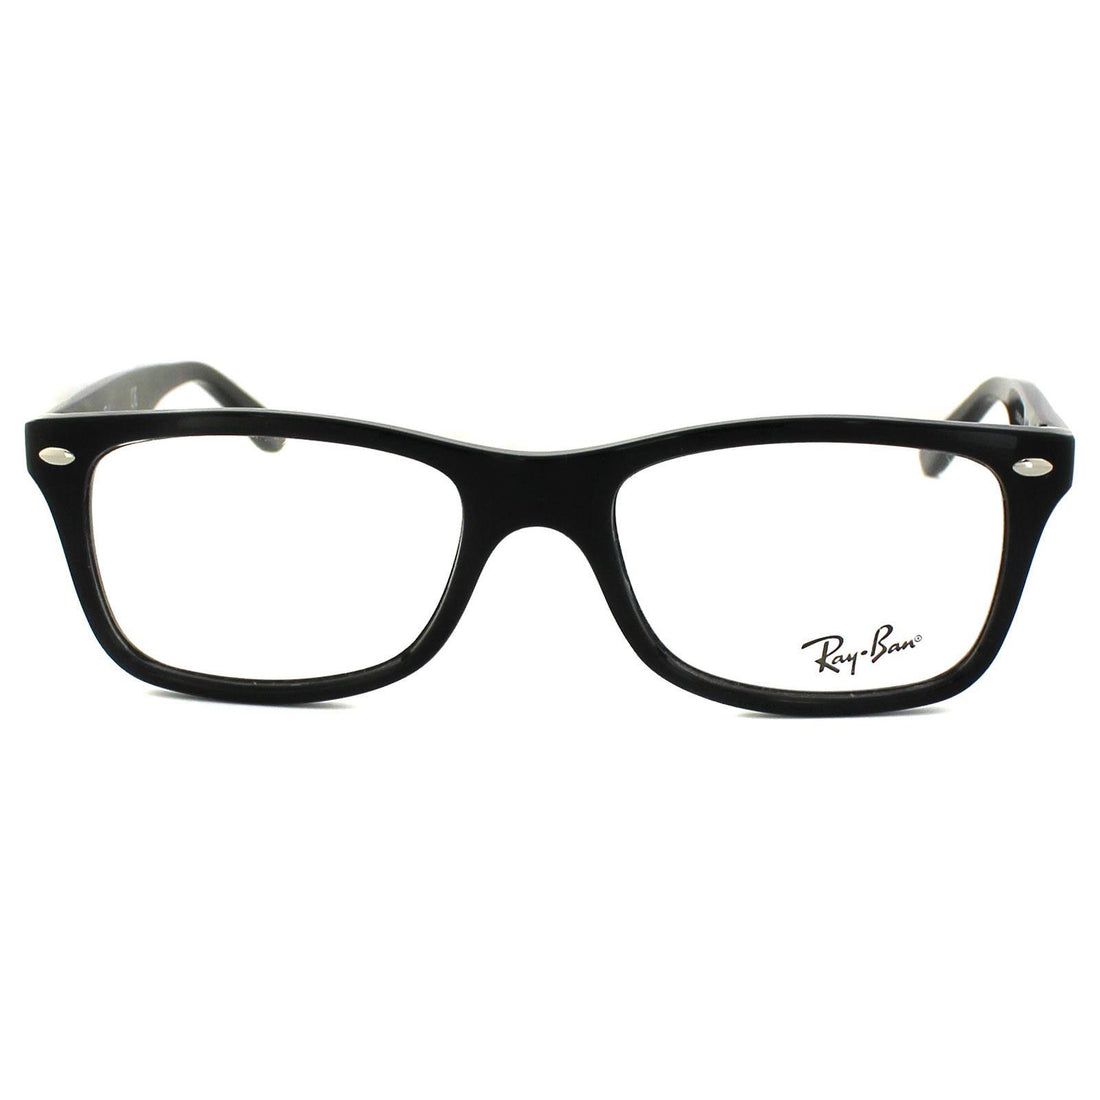 Ray-Ban 5228 Glasses Black